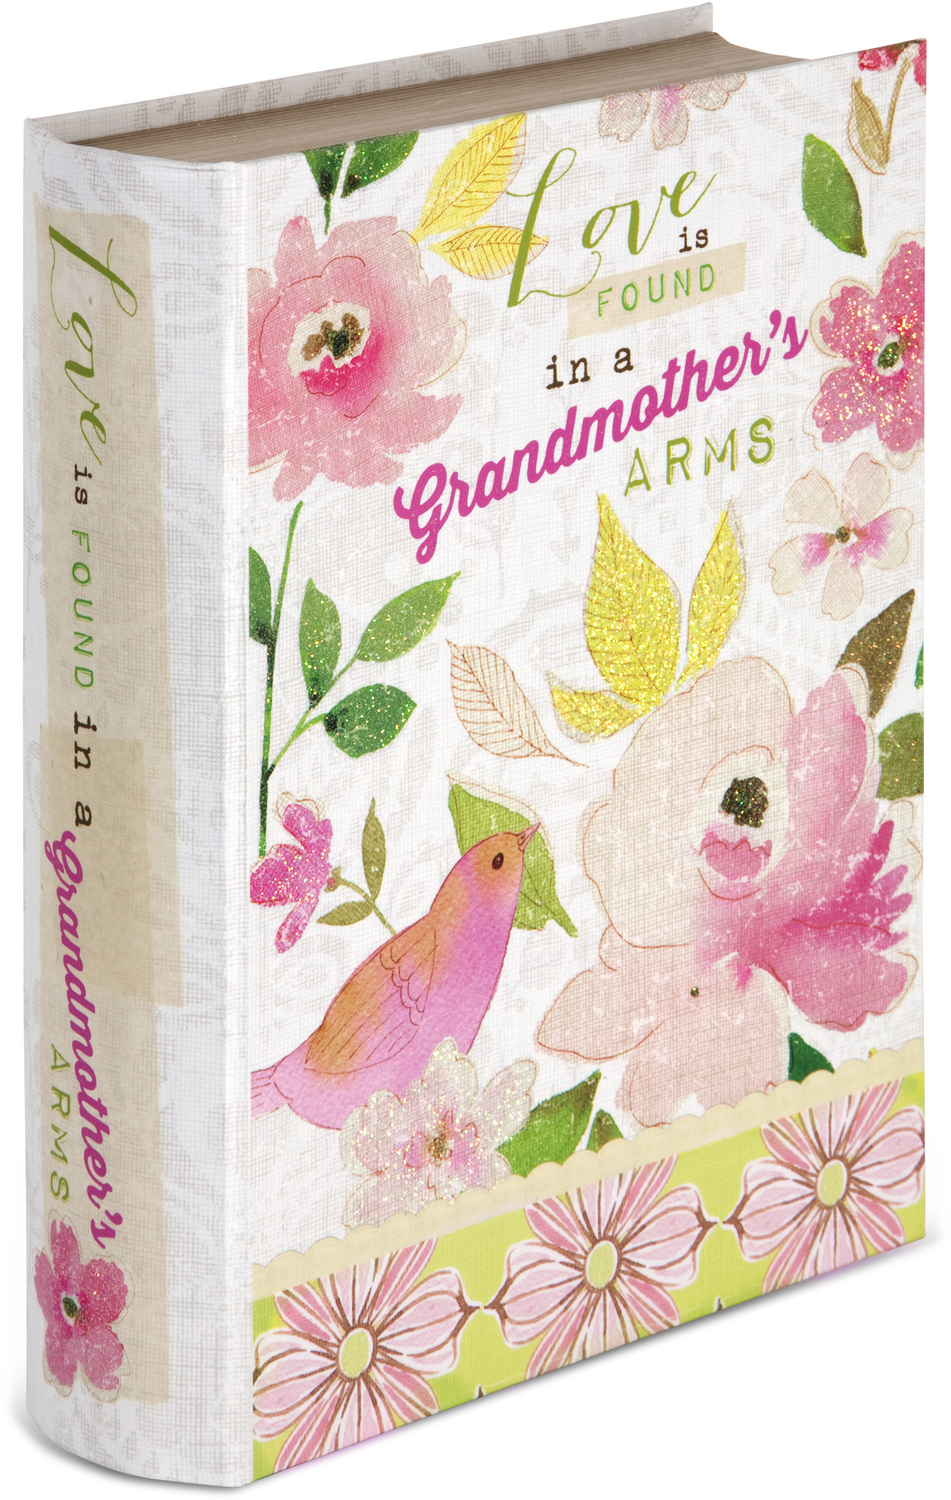 Grandmother by Vintage by Stephanie Ryan - Grandmother - 6.5" x 2" x 8.5" Musical Book Box